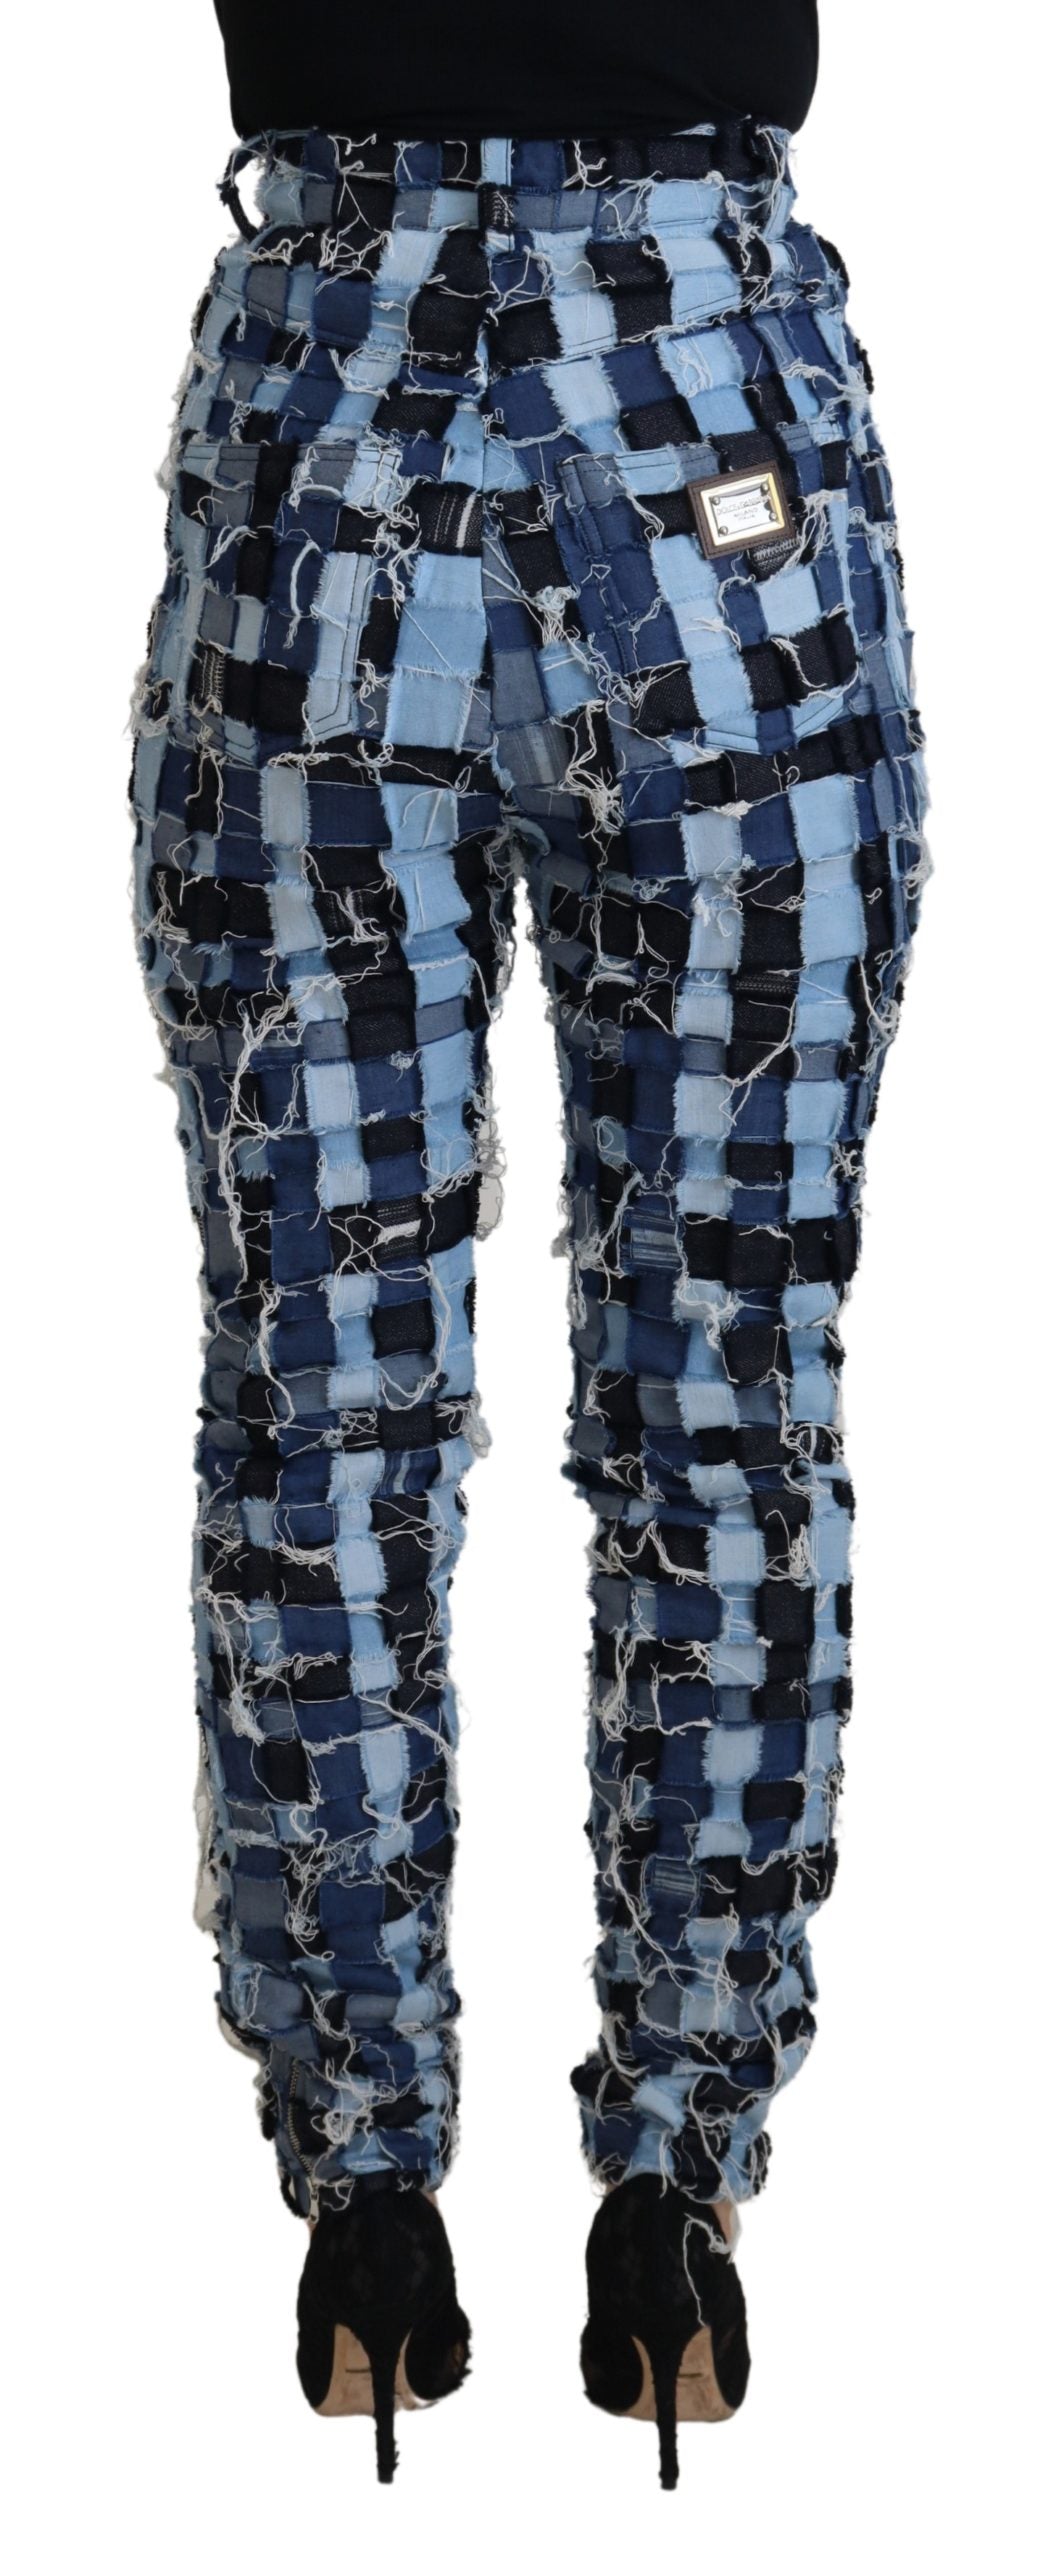 Dolce & Gabbana Multicolor Patchwork High-Waist Skinny Jeans